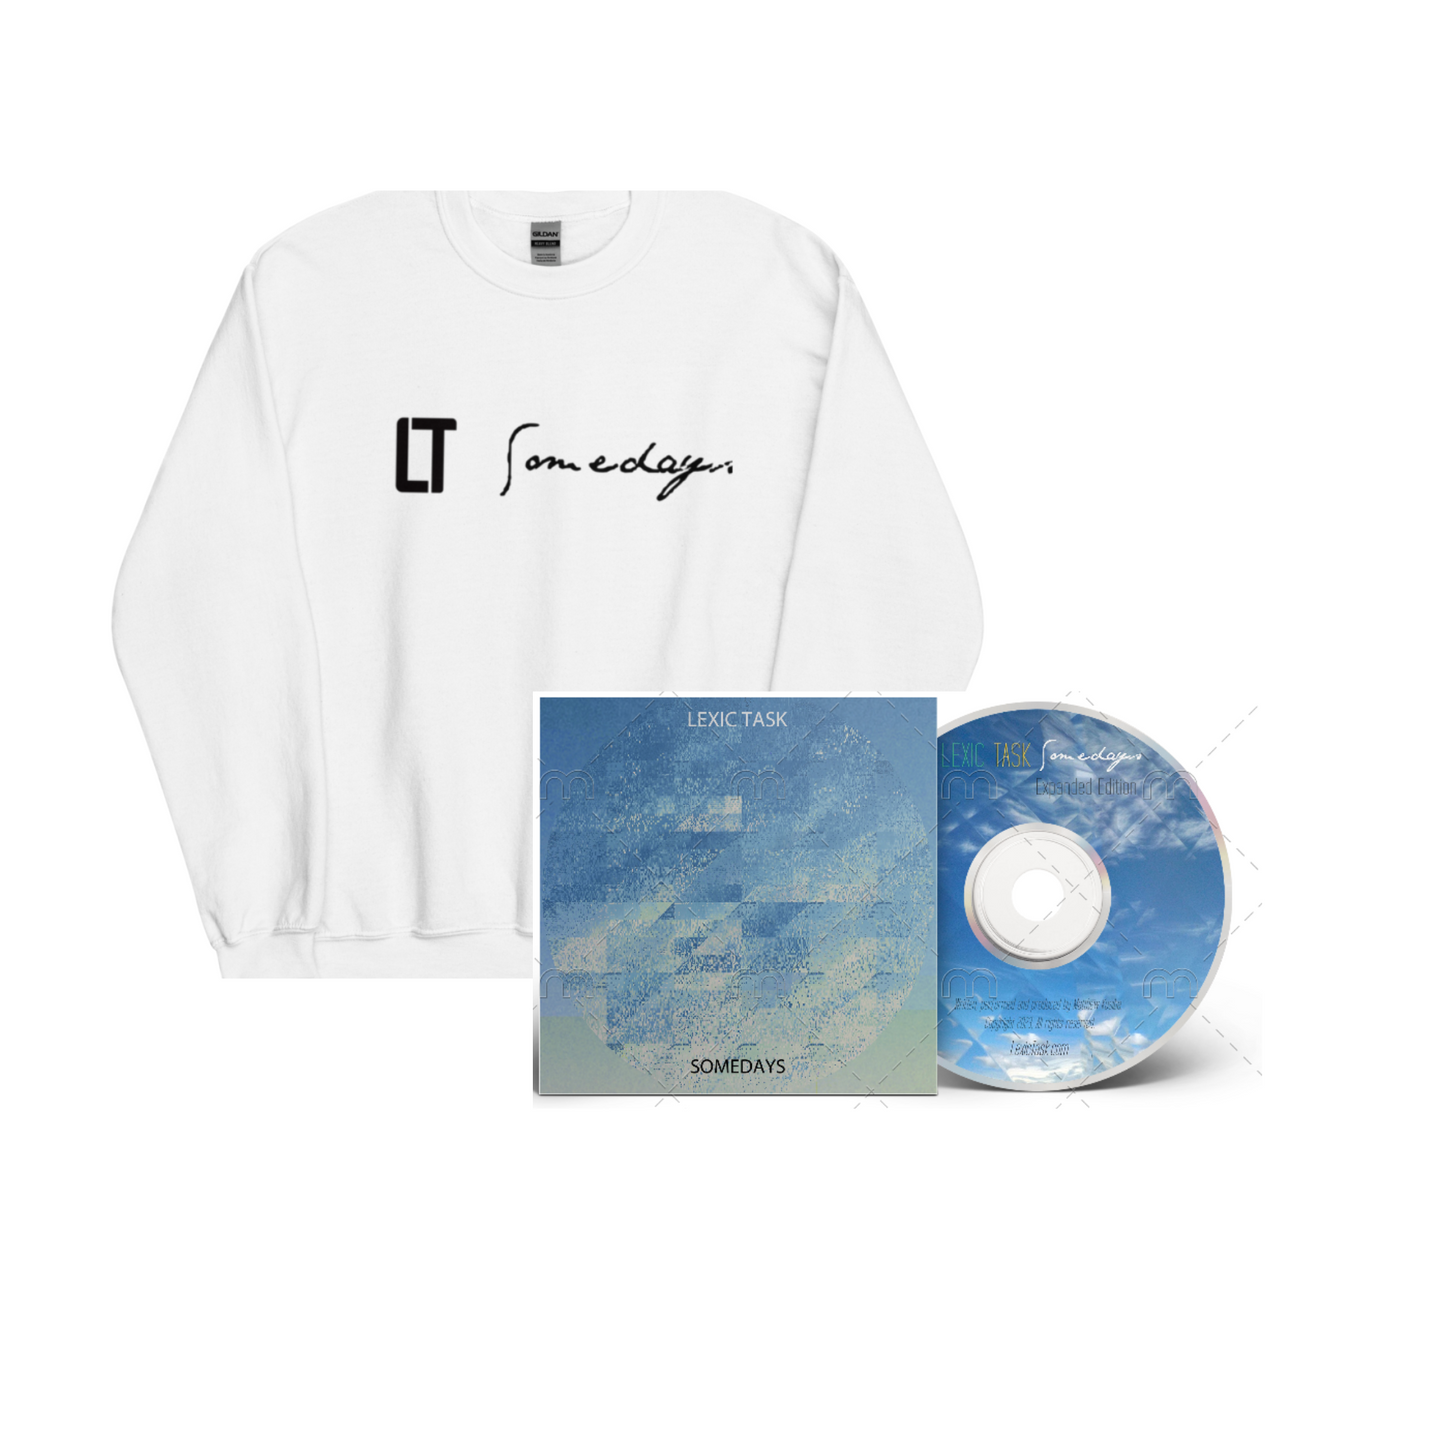 LT Somedays (Expanded) CD + Sweatshirt bundle